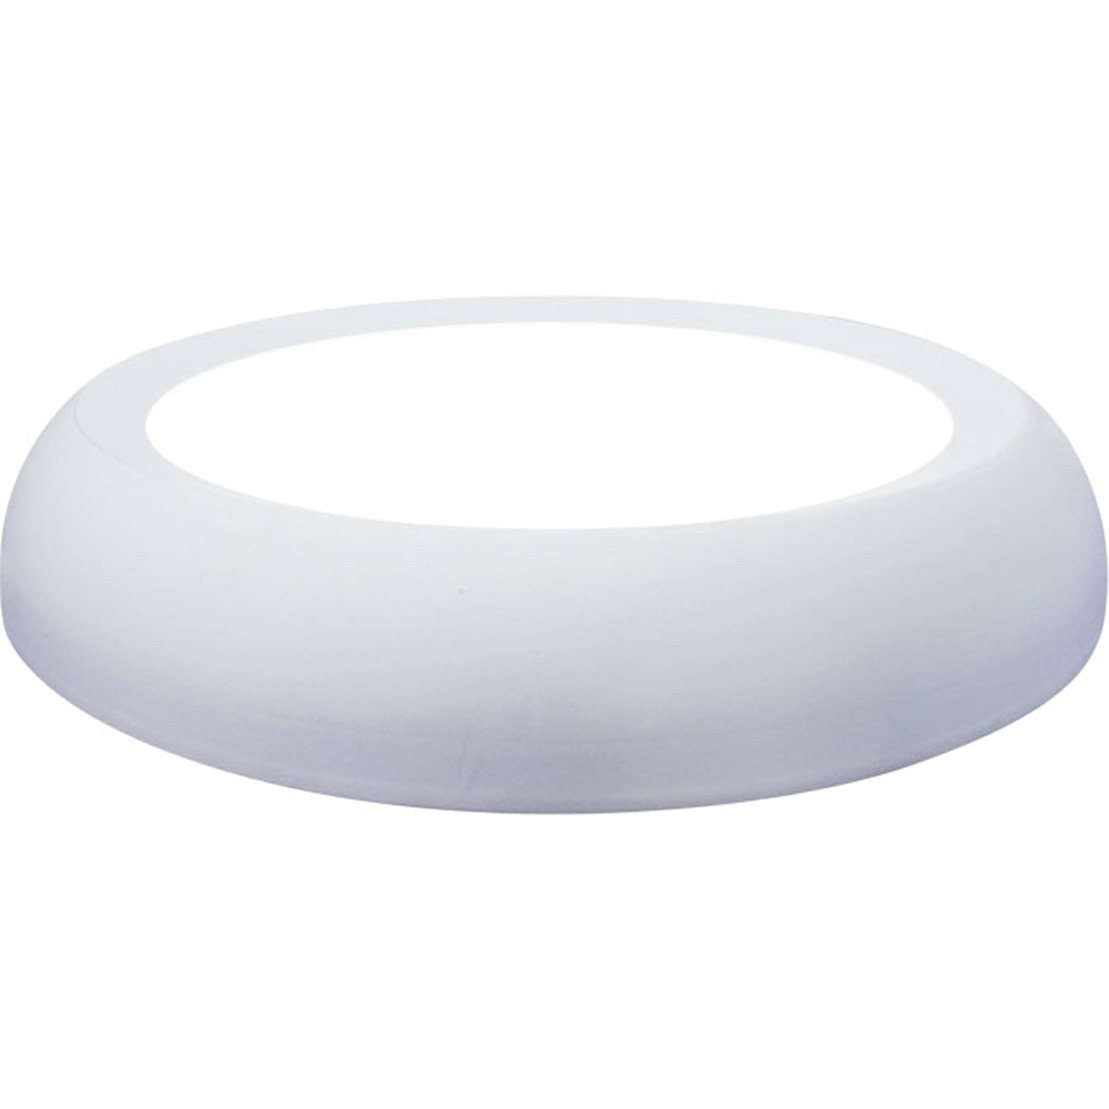 FocusLight SLIM LED - Kattovalaisin - Valkoinen - Integroitu LED - 15W LED (incl.)